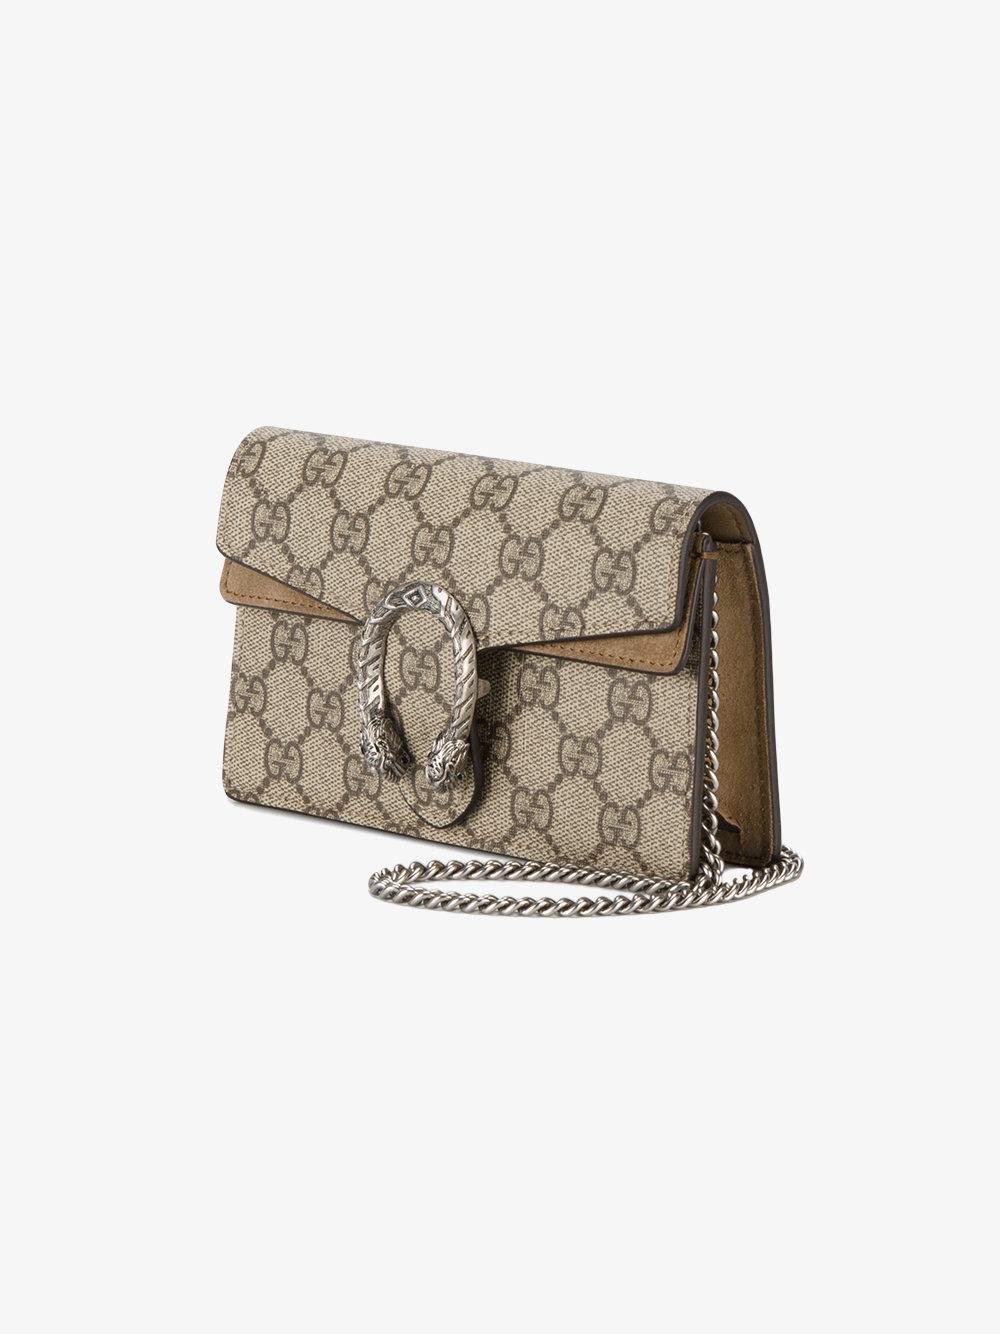 Gucci Dionysus GG Supreme Mini Bag Beige Chain Bag Style ‎421970